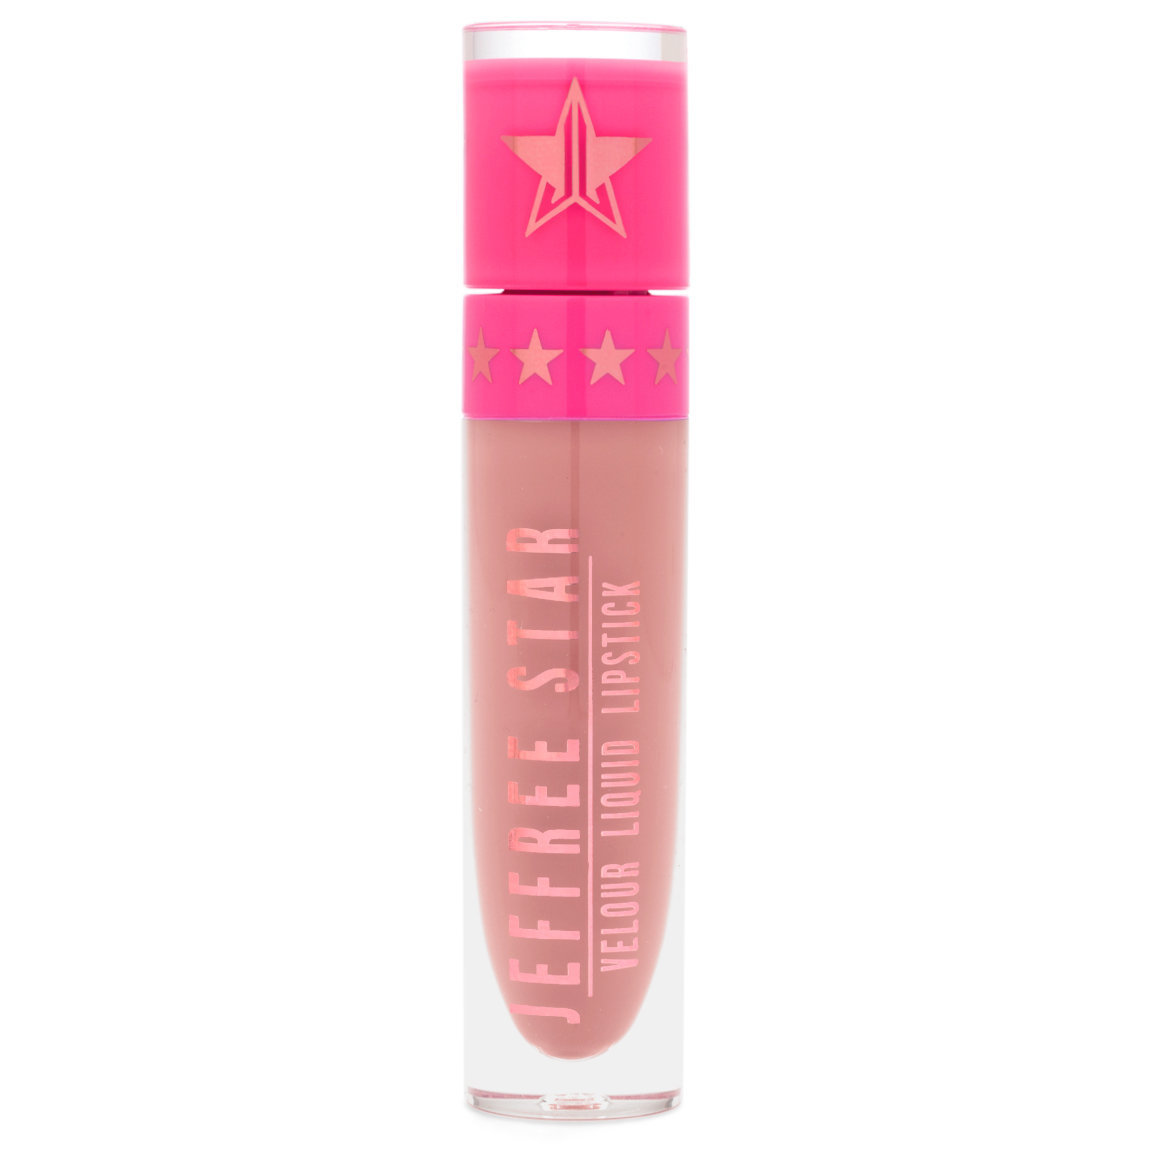 NEW Mini Jeffree Star Liquid Lipsticks Bundle (Volume 2 